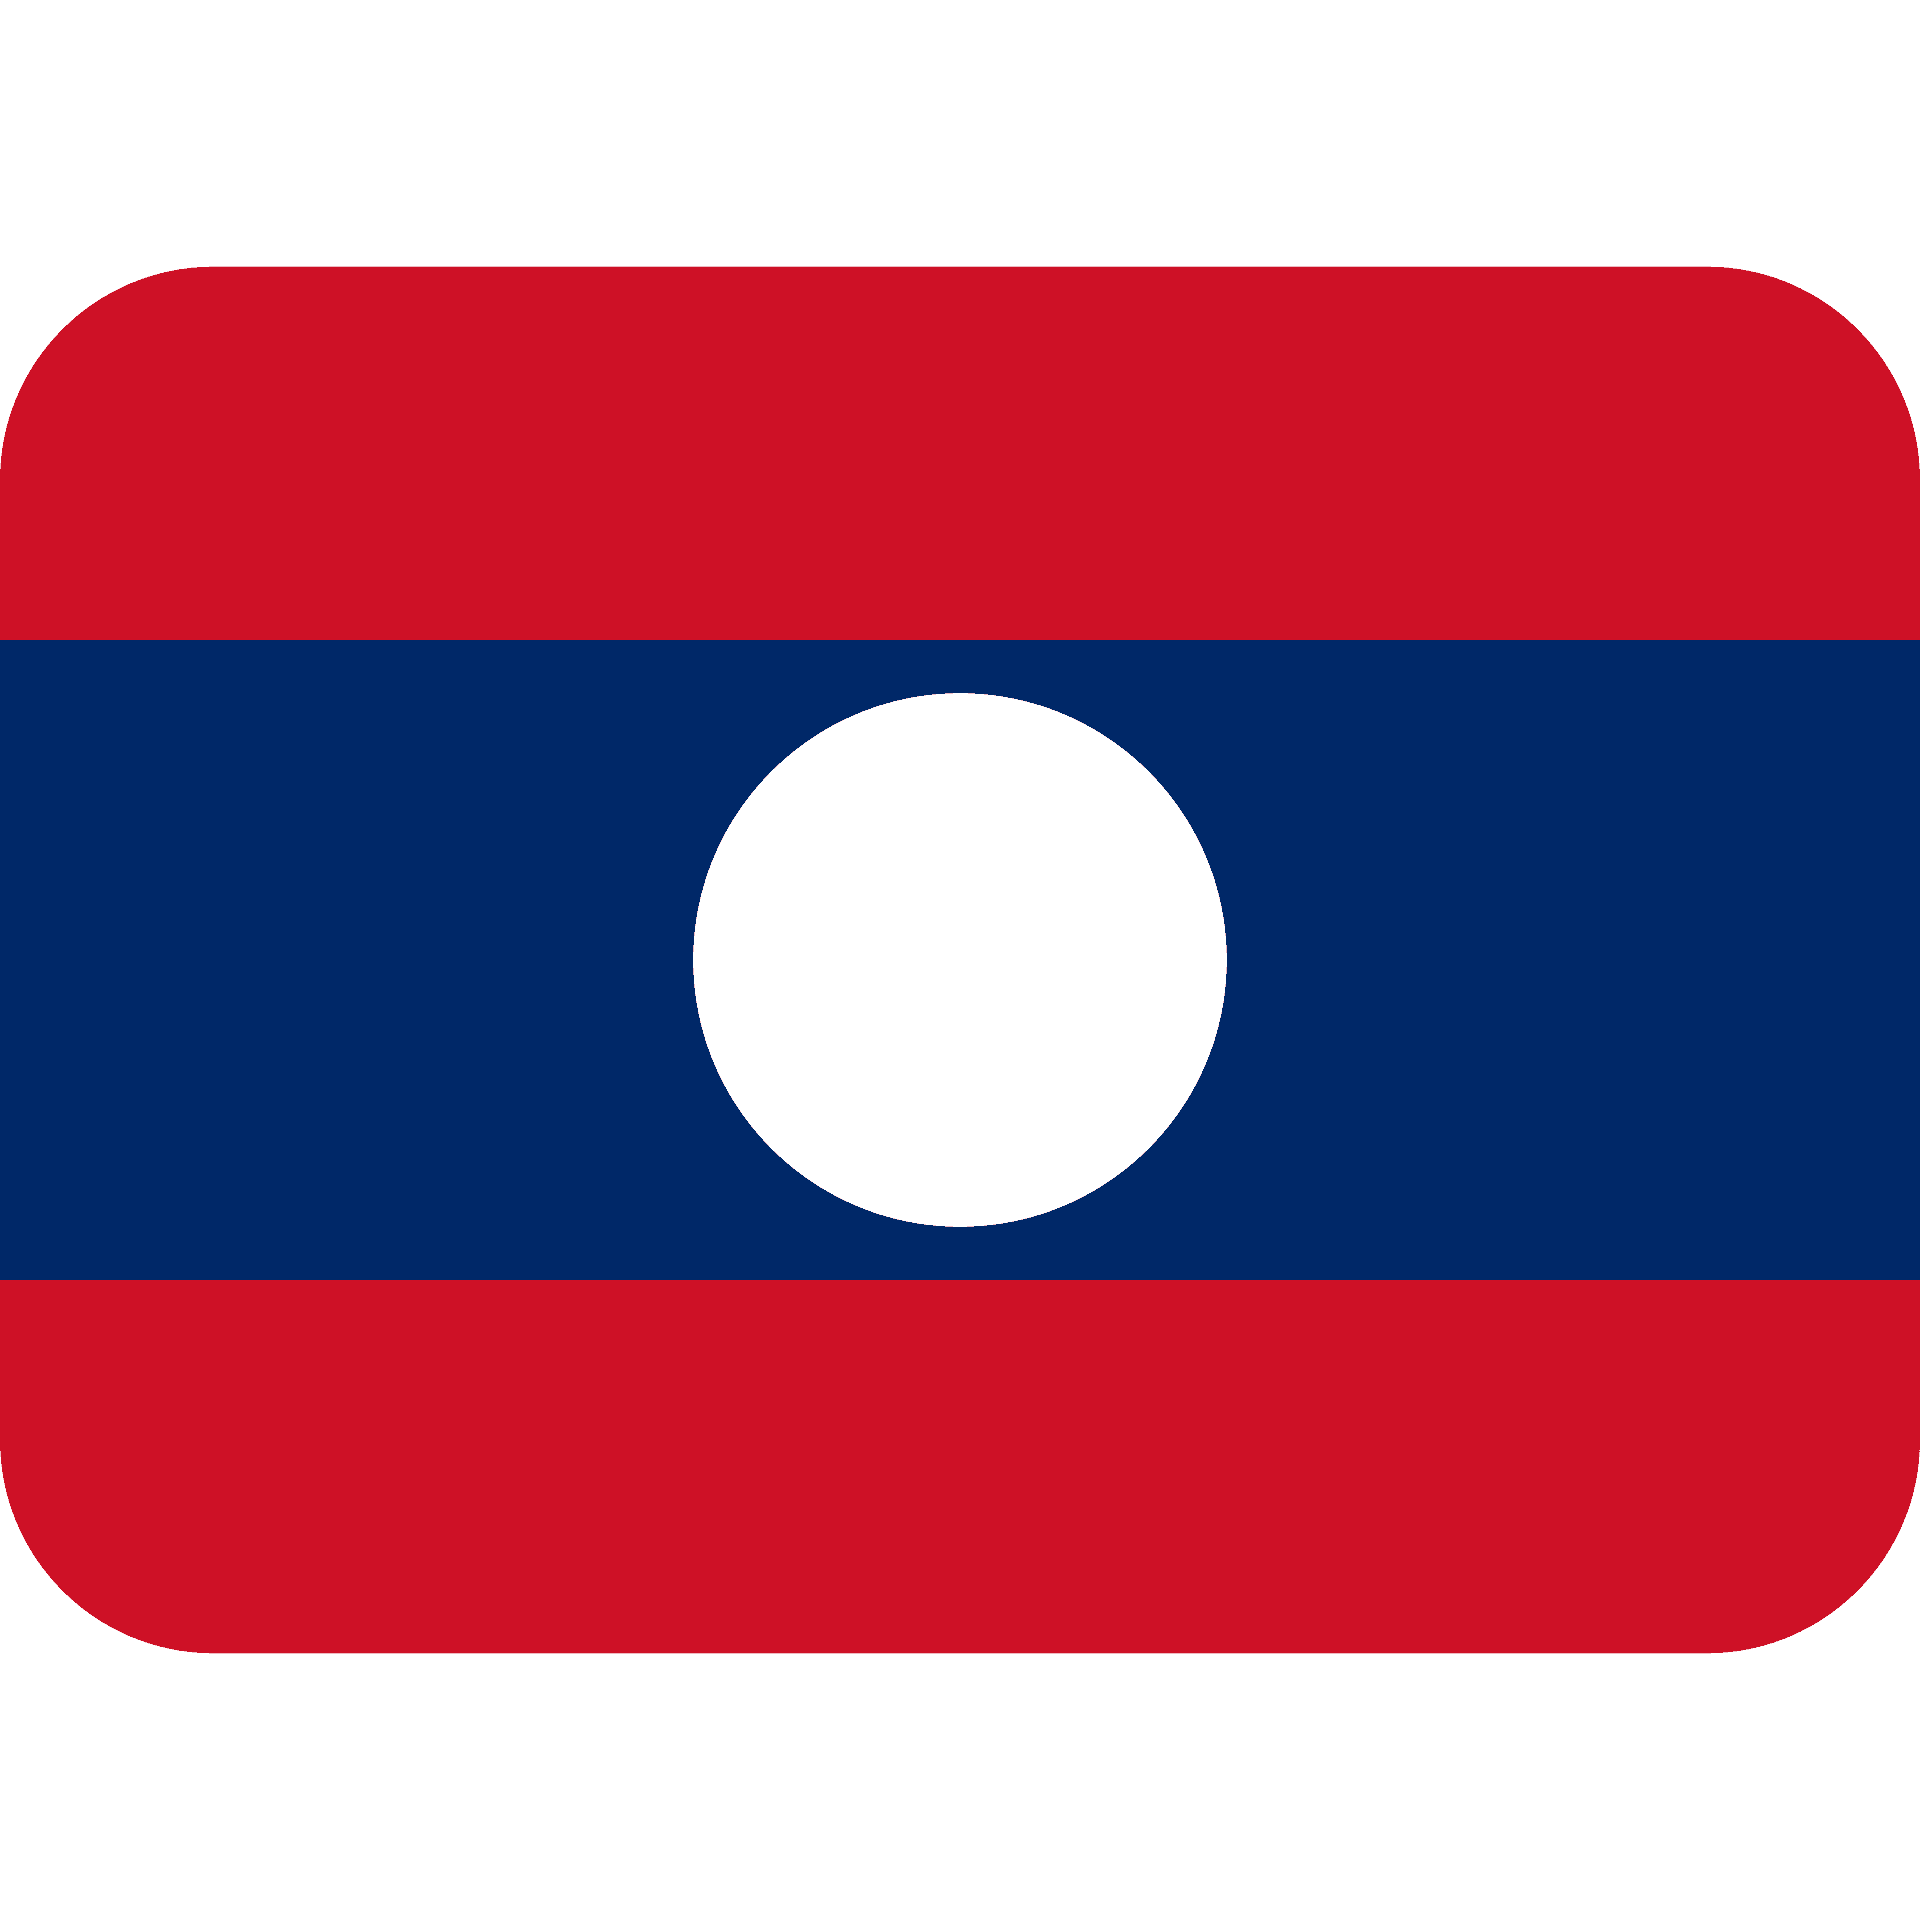 Laos National Flag PNG